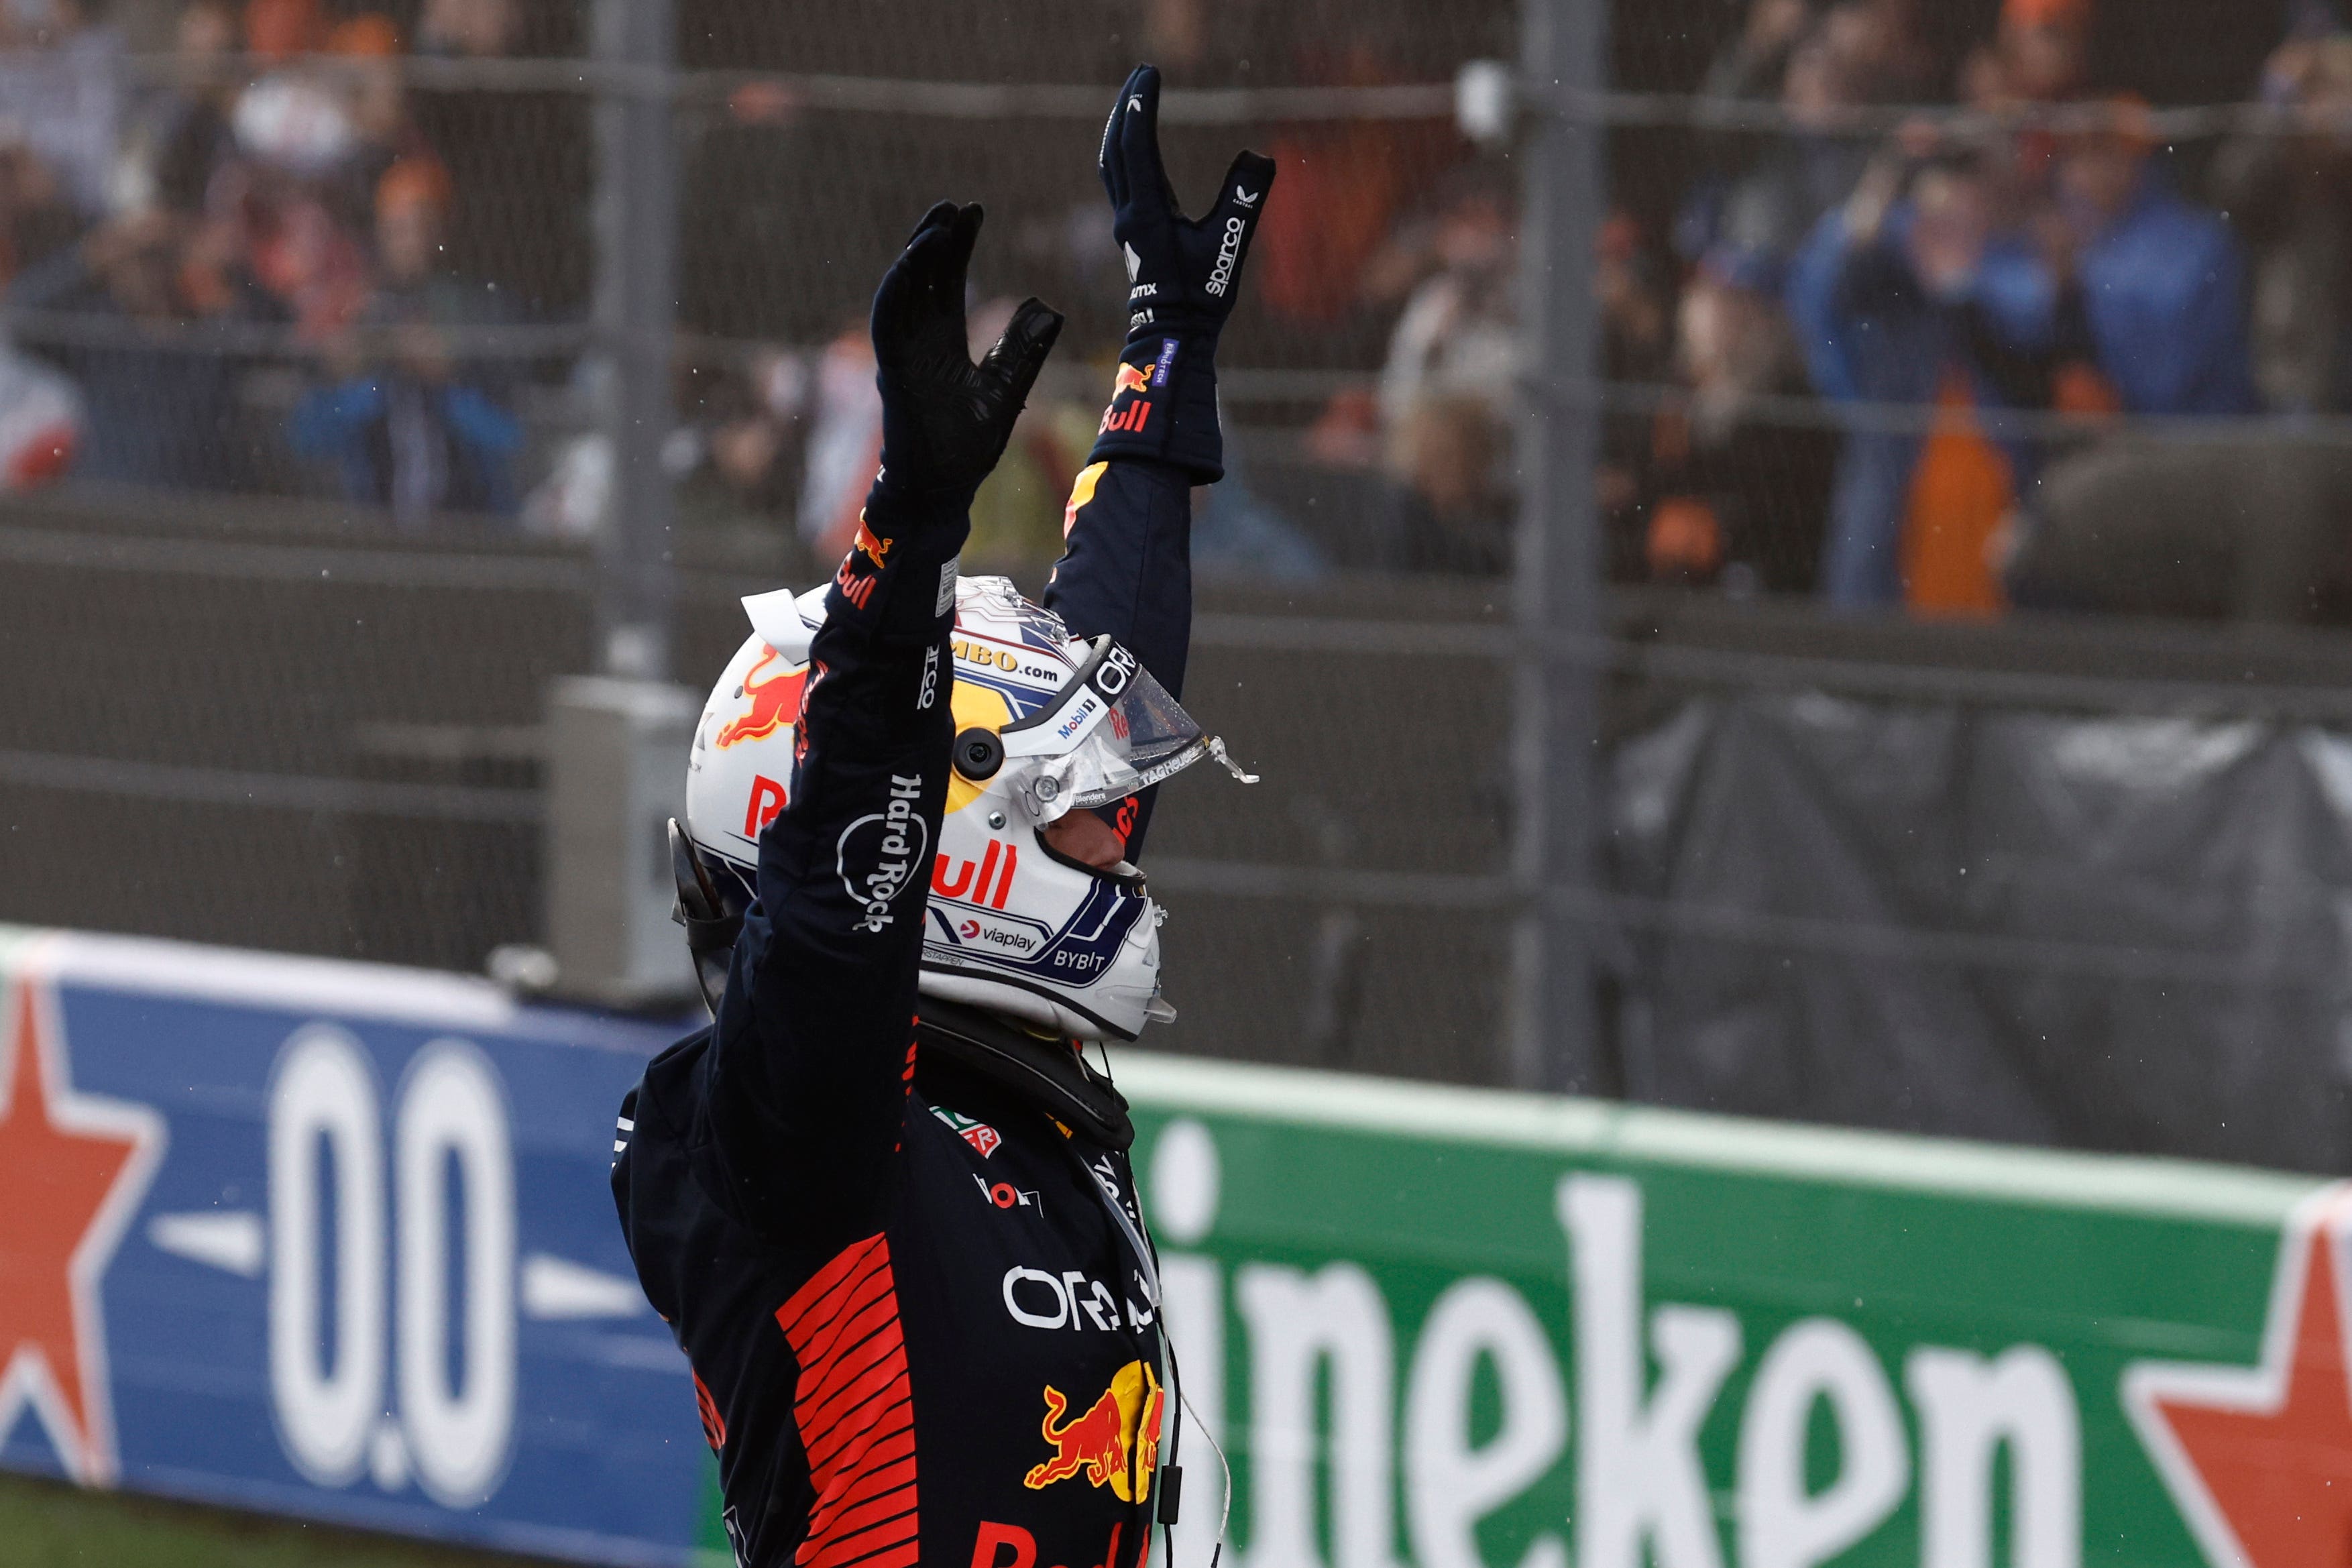 Red Bull’s Max Verstappen of the Netherlands celebrates after winning the F1 Dutch Grand Prix at the Zandvoort racetrack (Simon Wohlfart/Pool via AP)